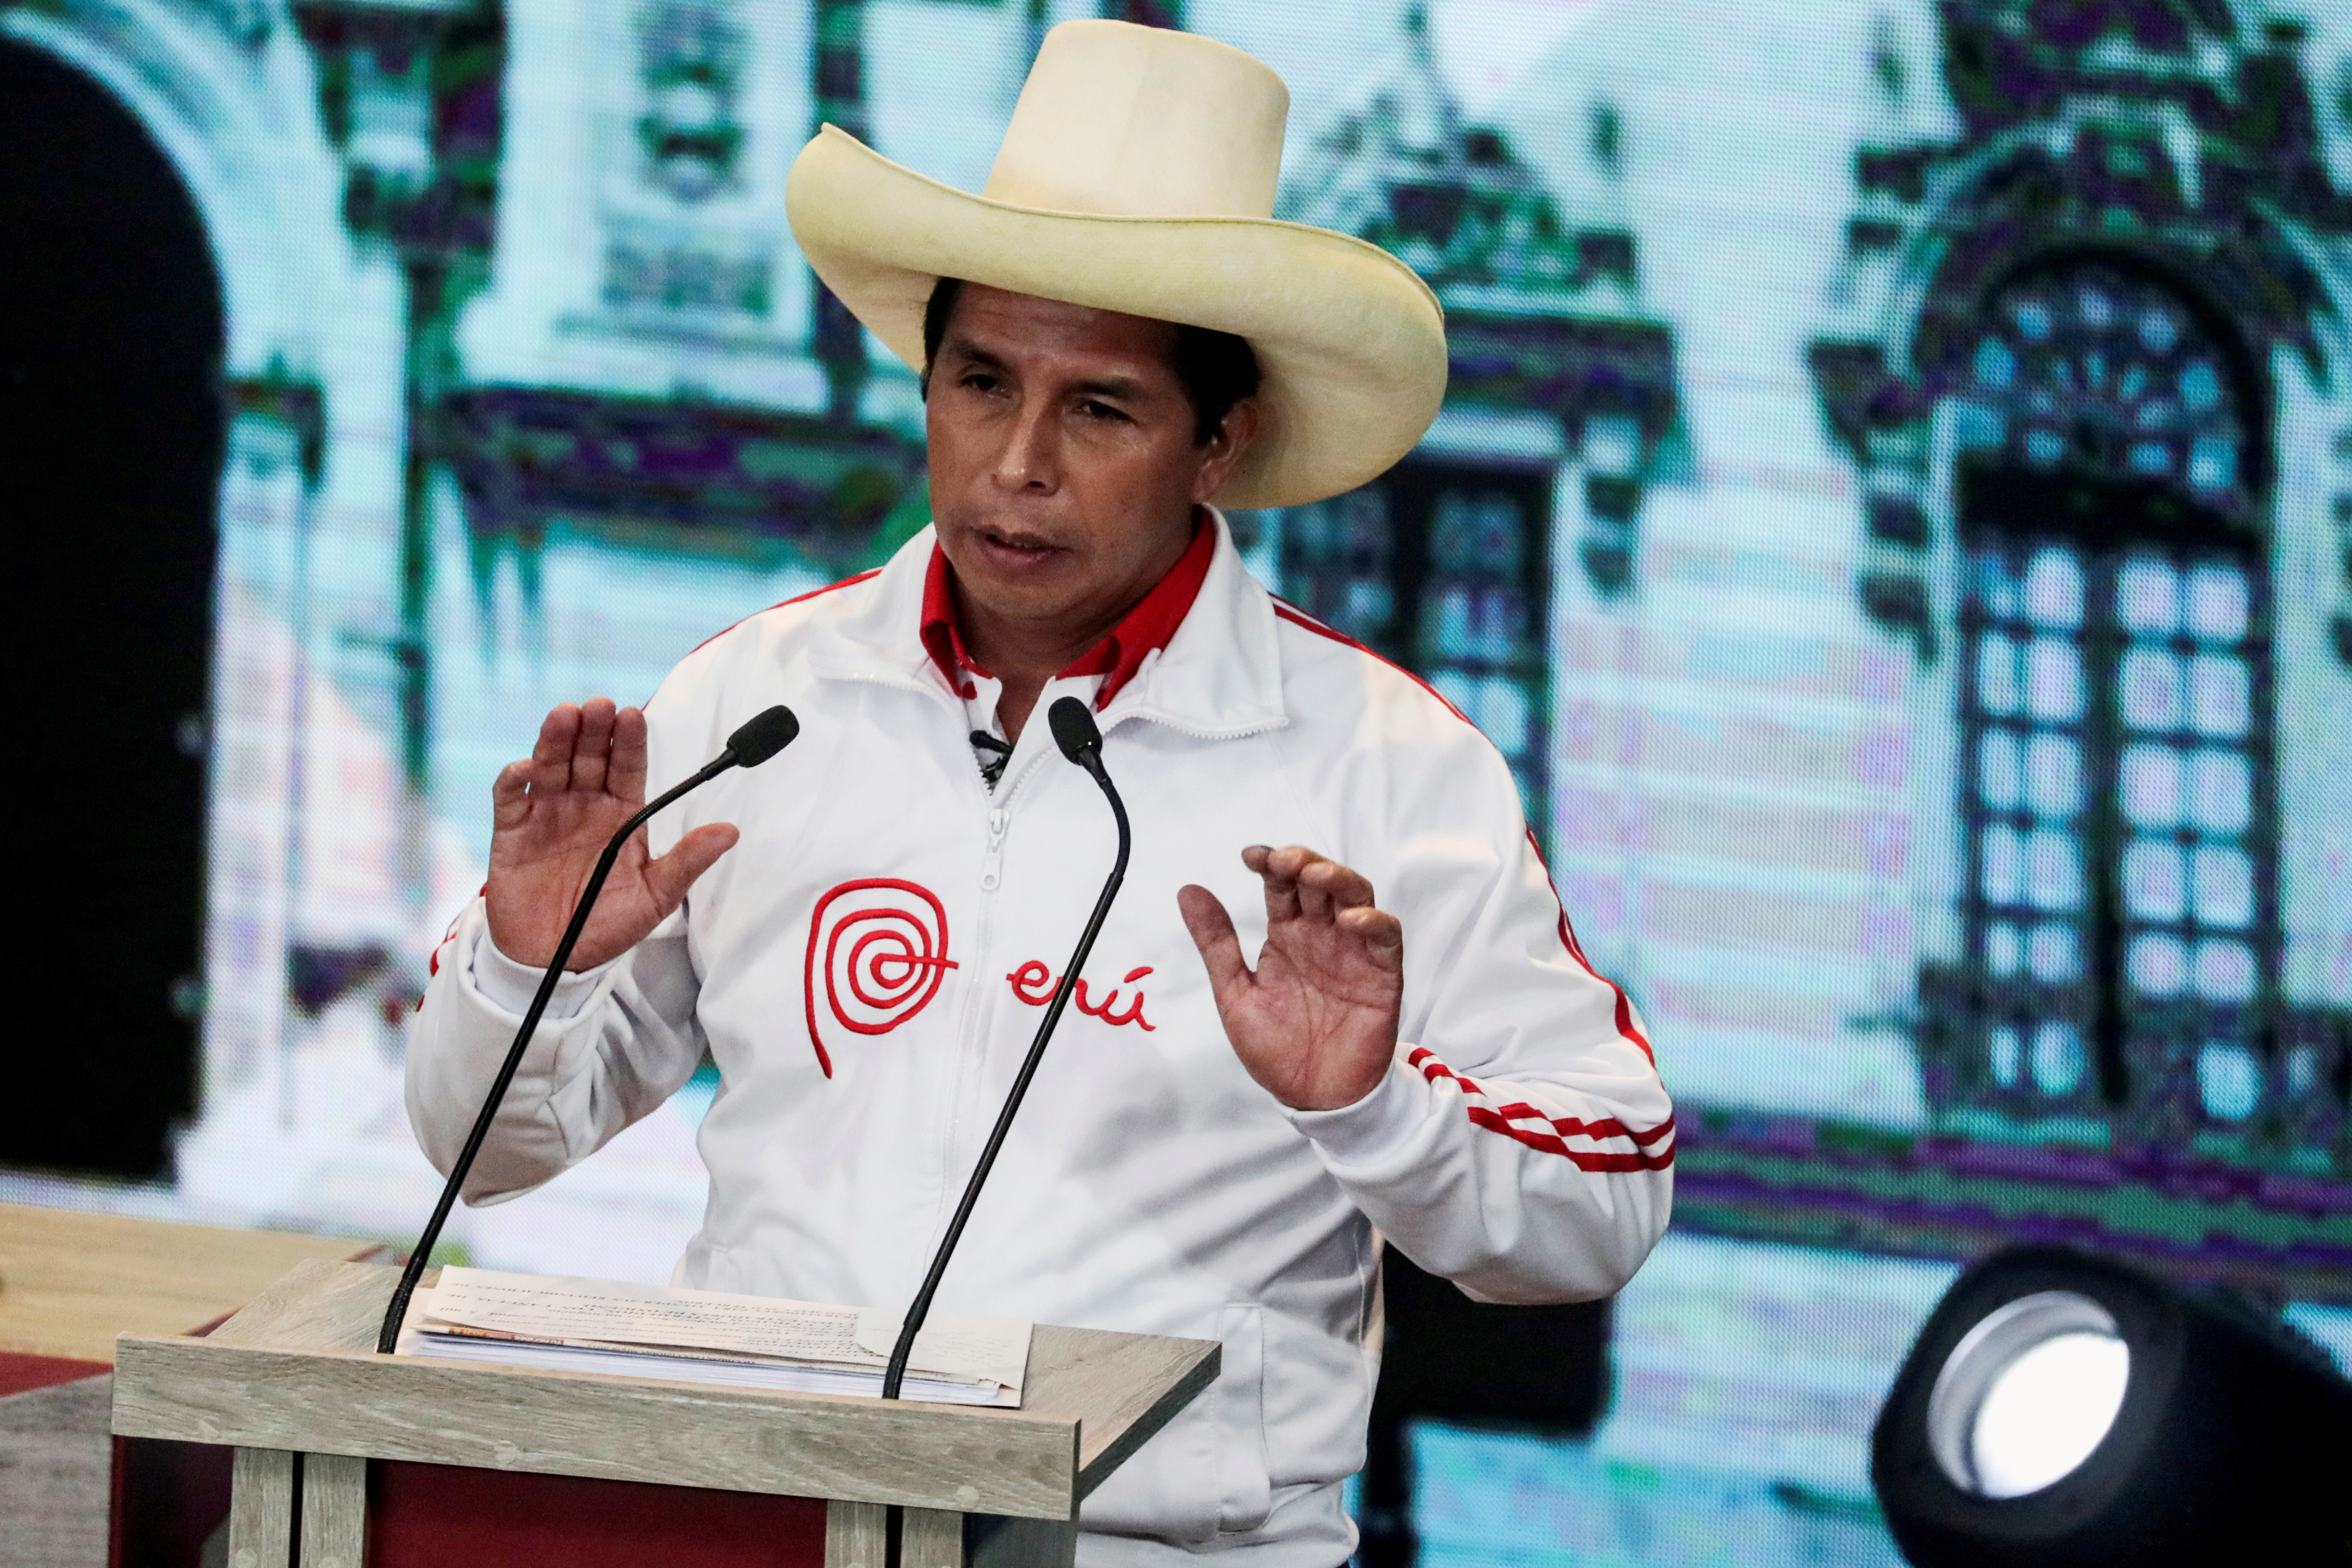 Peru's Pedro Castillo gestures during a debate in Arequipa, Peru May 30, 2021. REUTERS/Sebastian Castaneda/Pool/File Photo